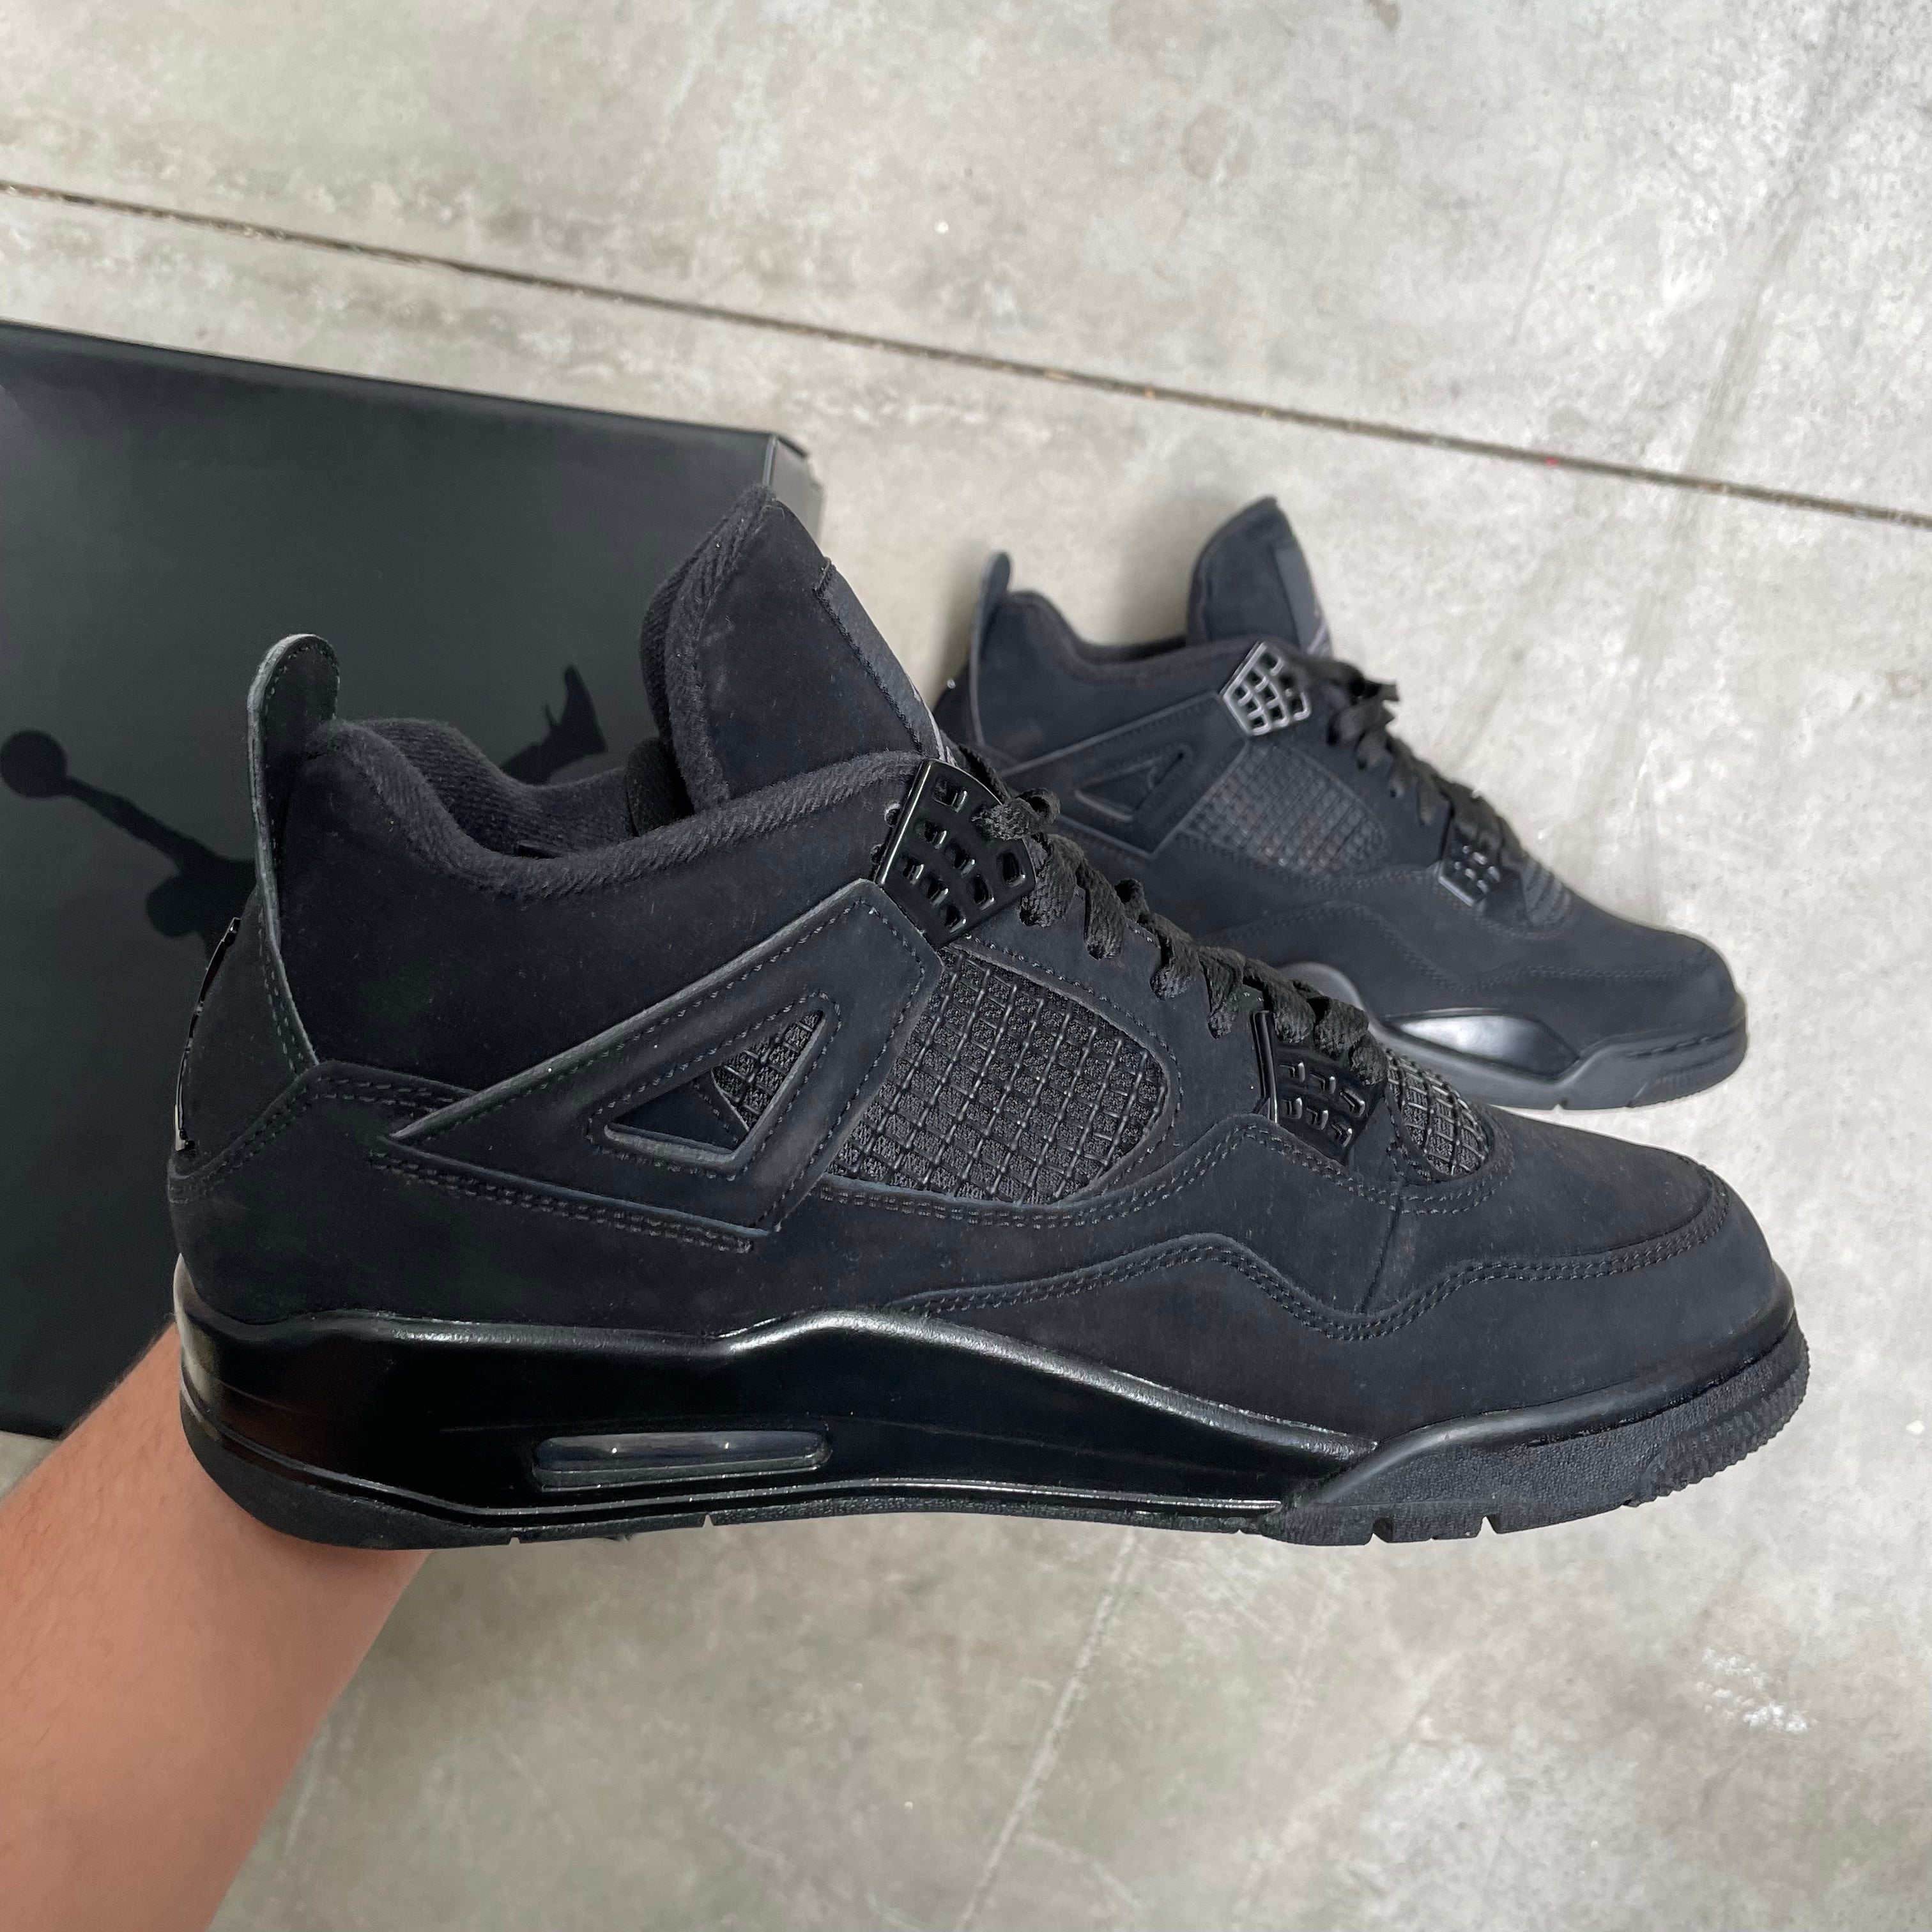 Nike Jordan 4 Retro Black Cat 2020 US10